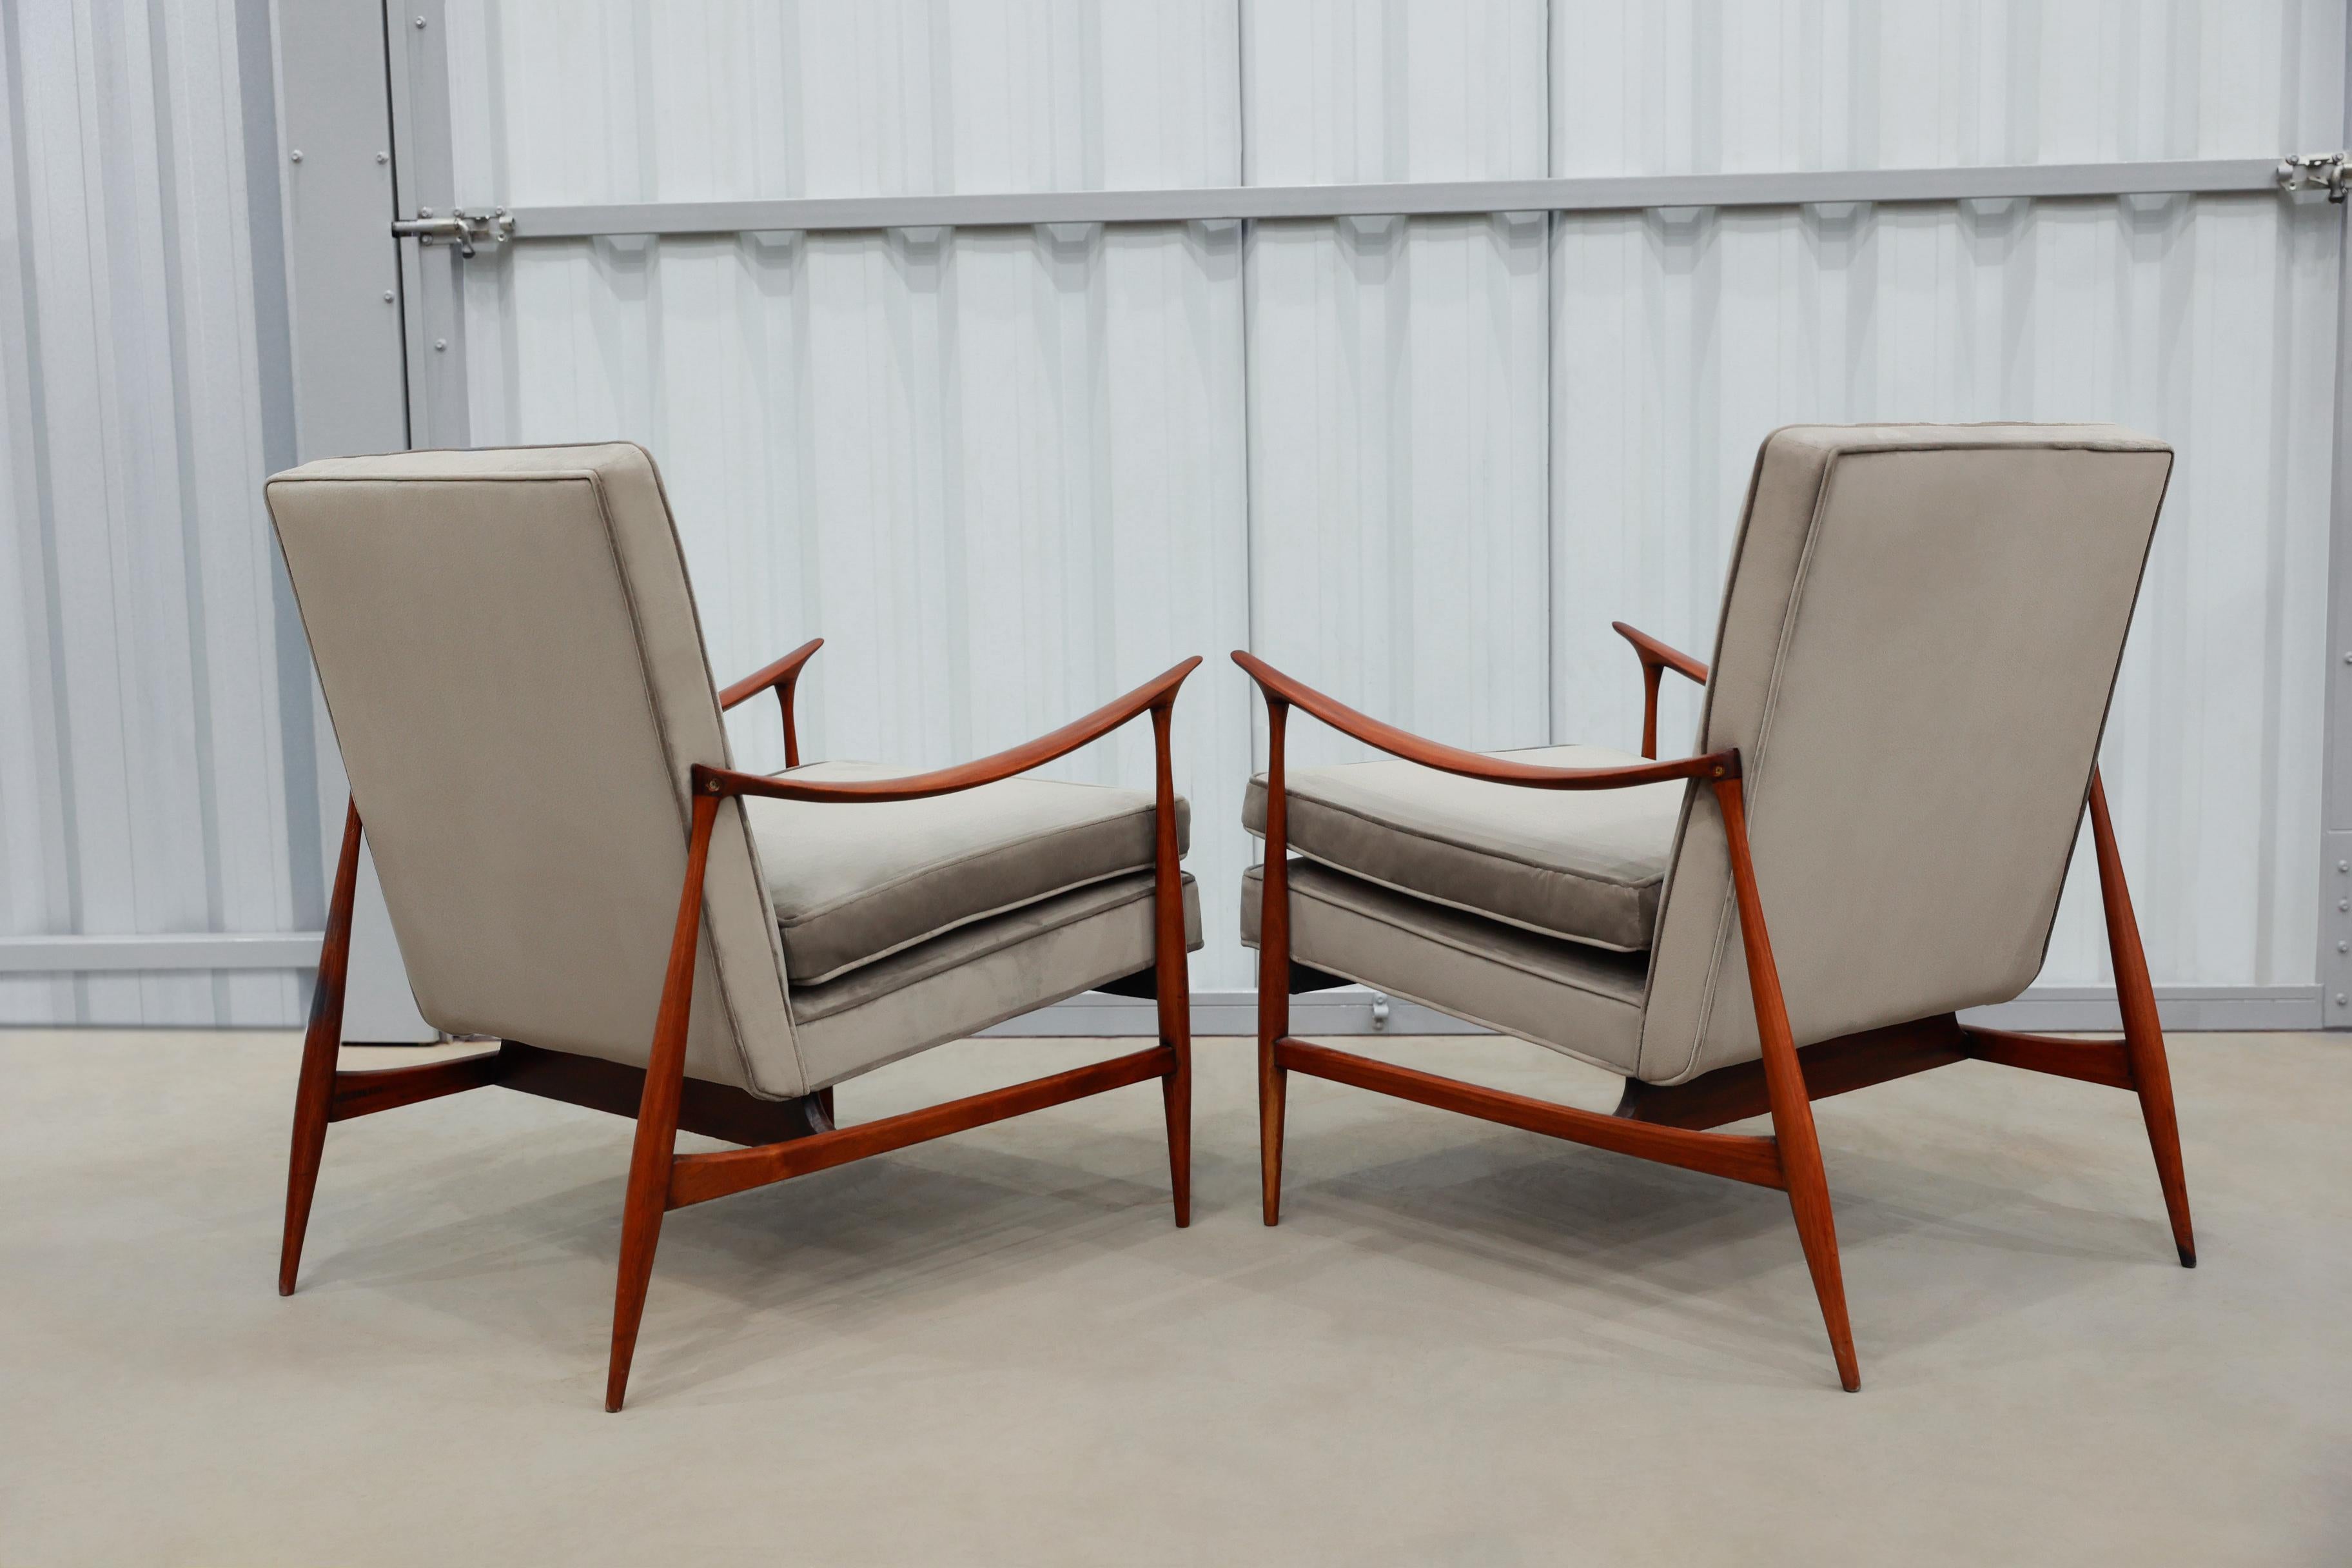 Brazilian Modern Armchairs in Hardwood & Brown Fabric, Jorge Zalszupin, c. 1950s For Sale 2